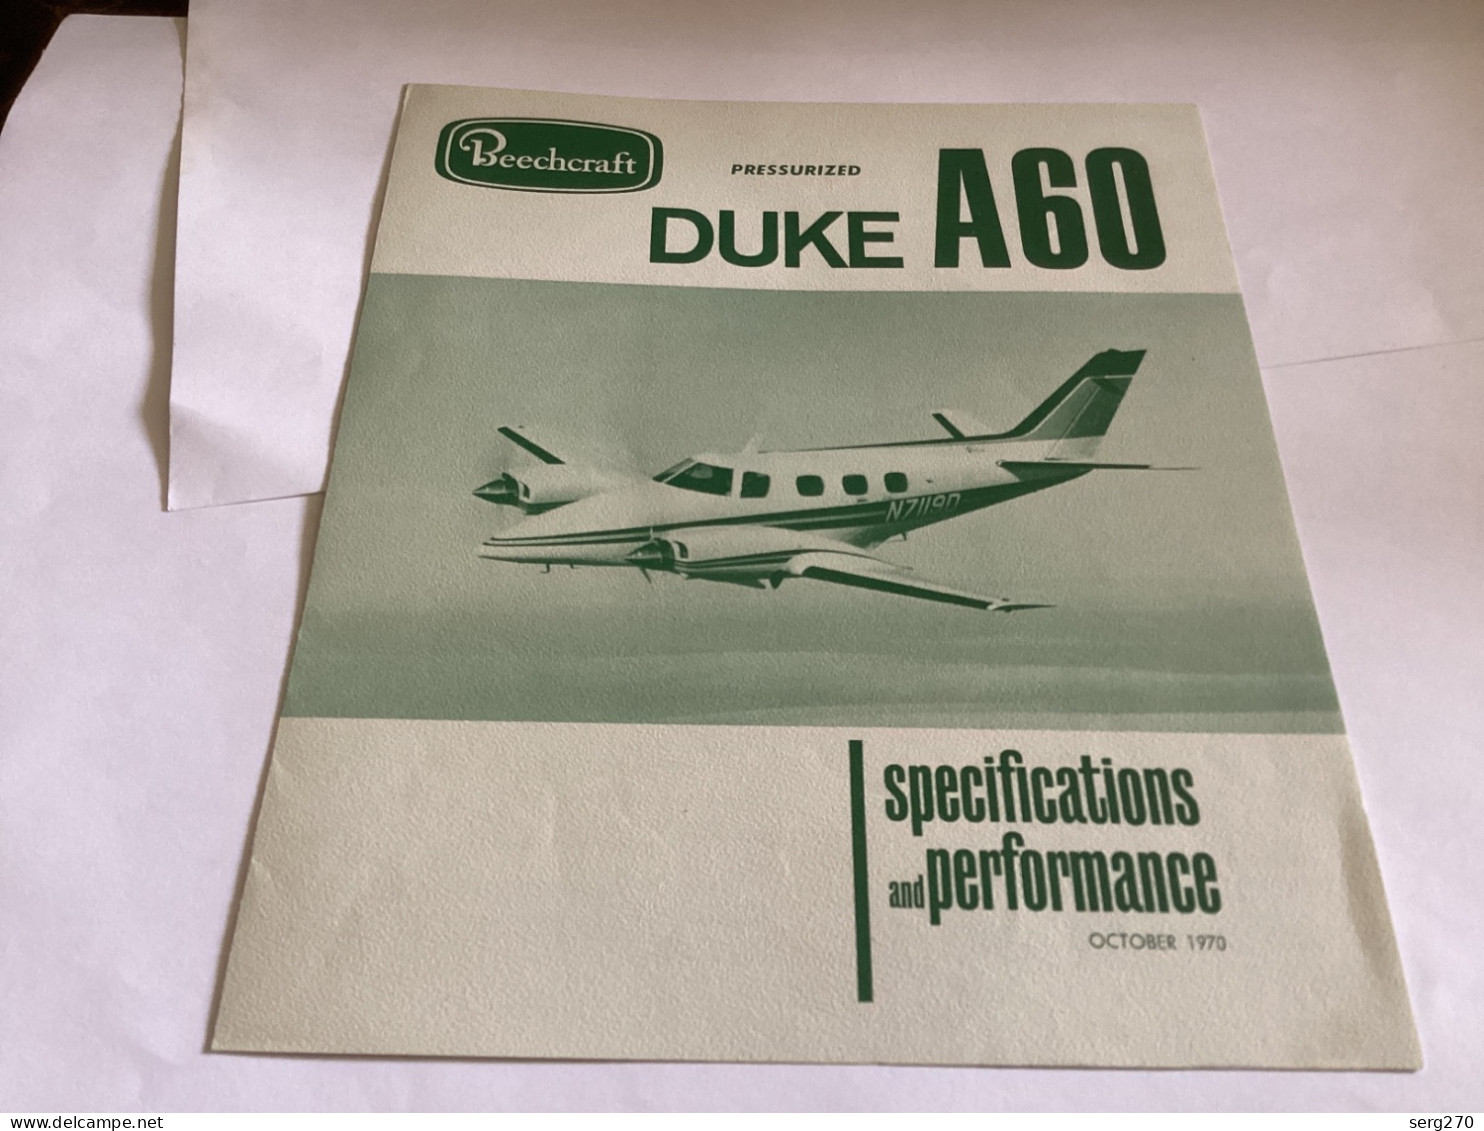 Avion Aviation Beecheraft PRESSURIZIO DUKE AGI 1970 Specifications And Performance OCTOBER 1970 - Transport